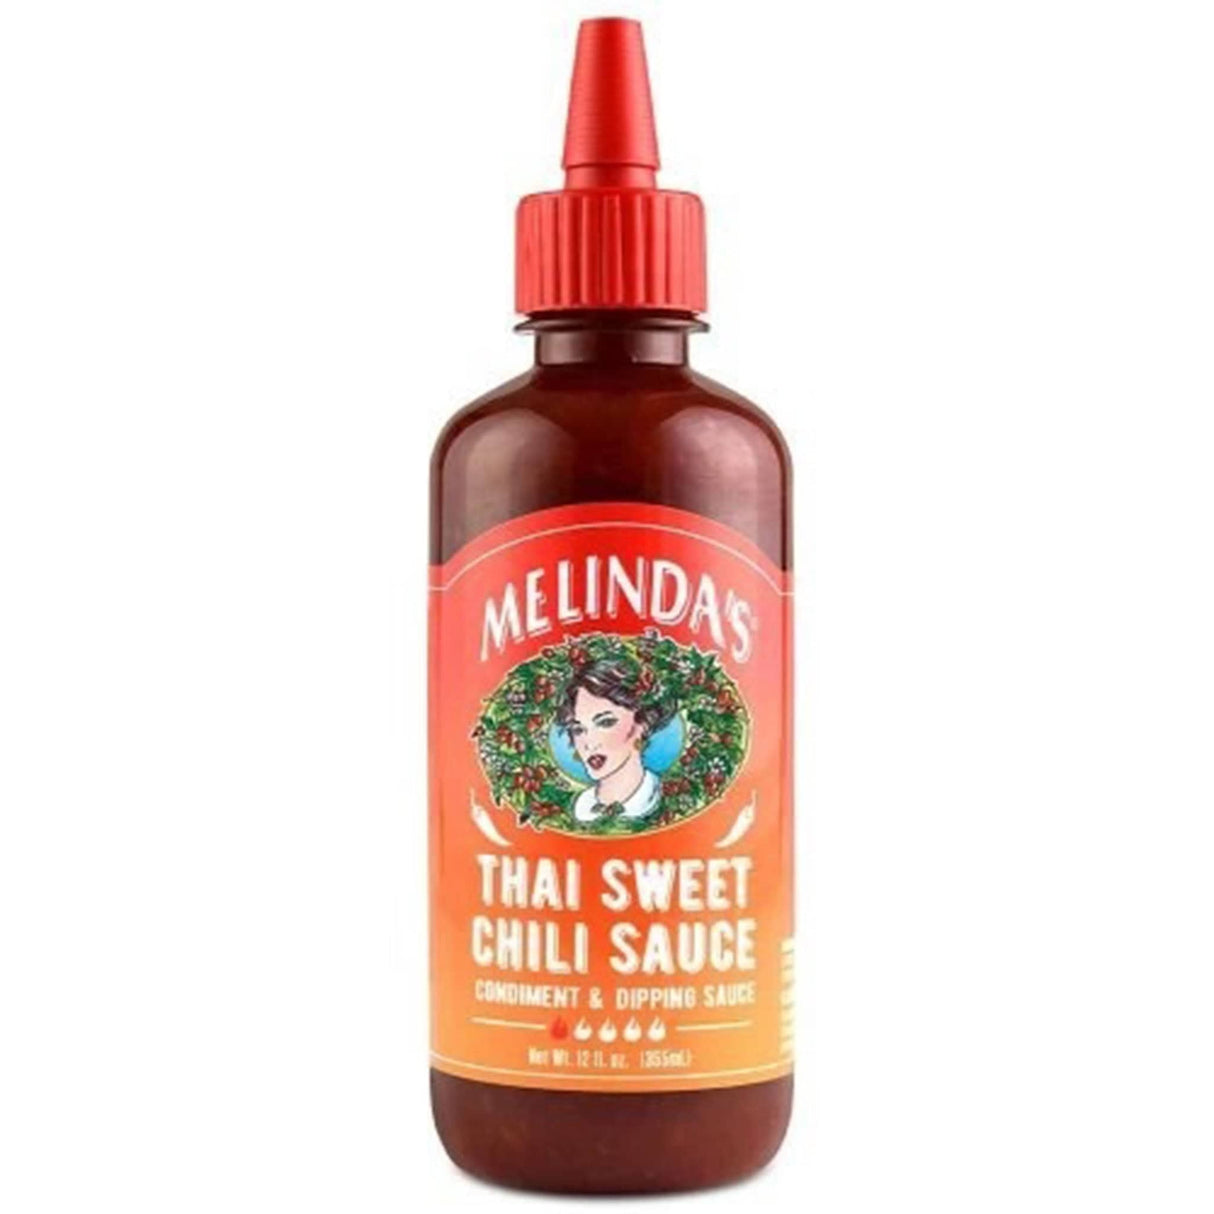 Melinda’s Thai Sweet Chili Sauce Condiment & Dipping Sauce